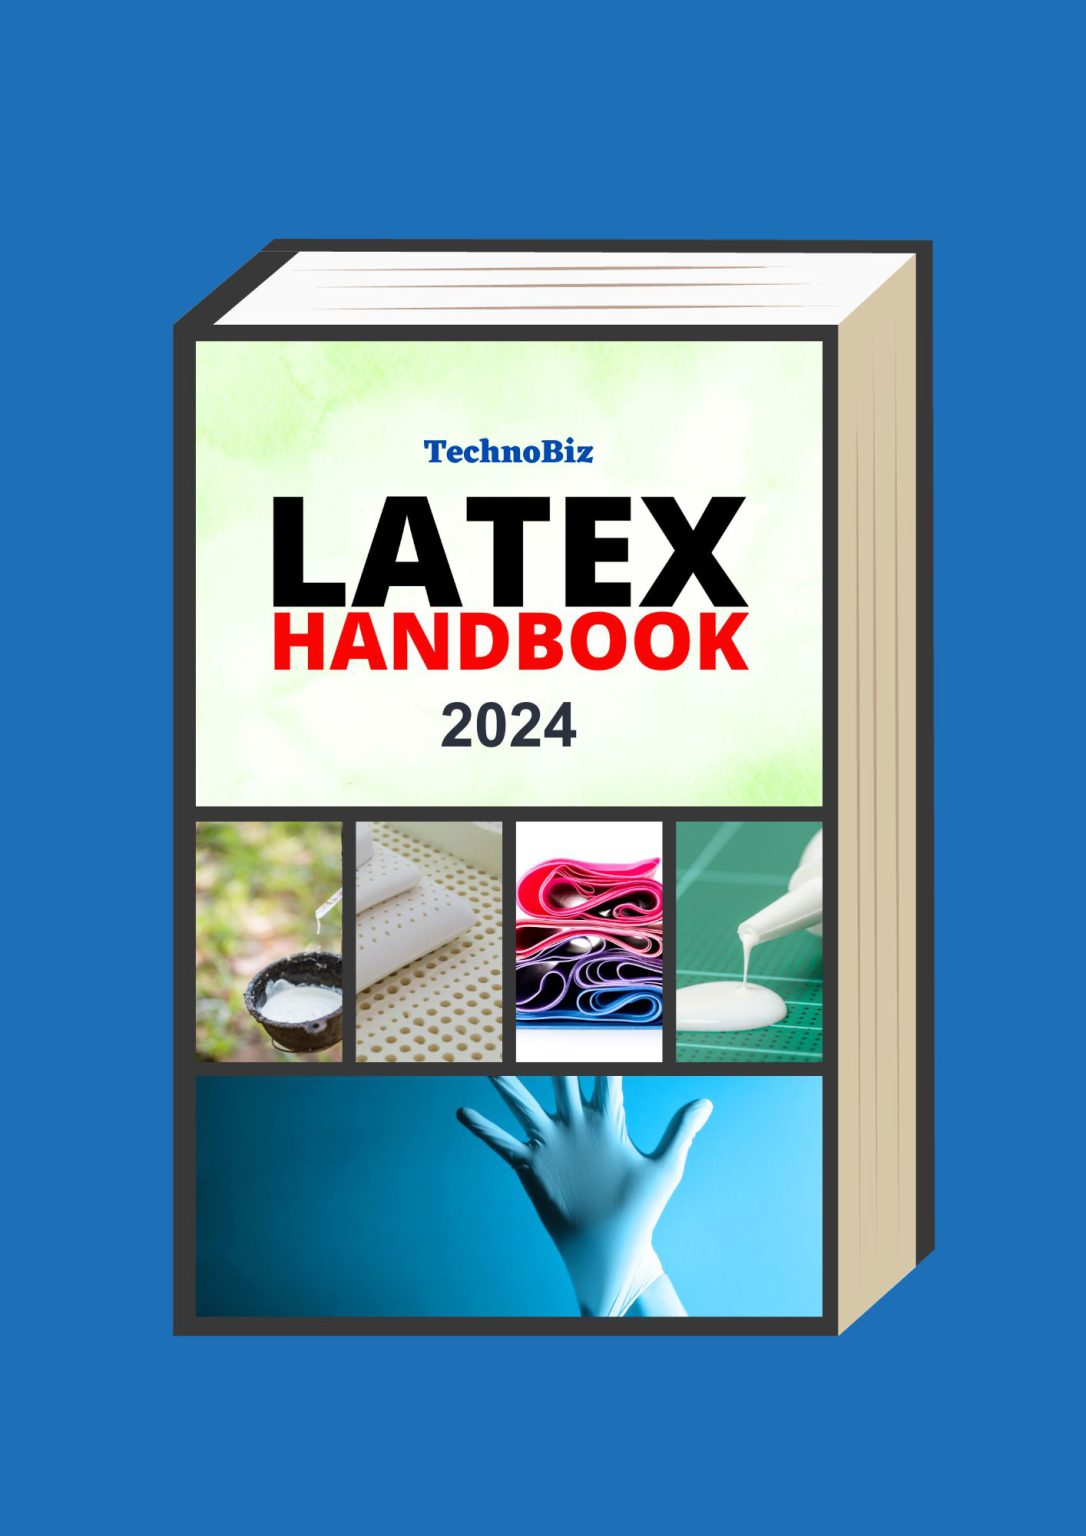 LATEX Handbook 2024 Store Online